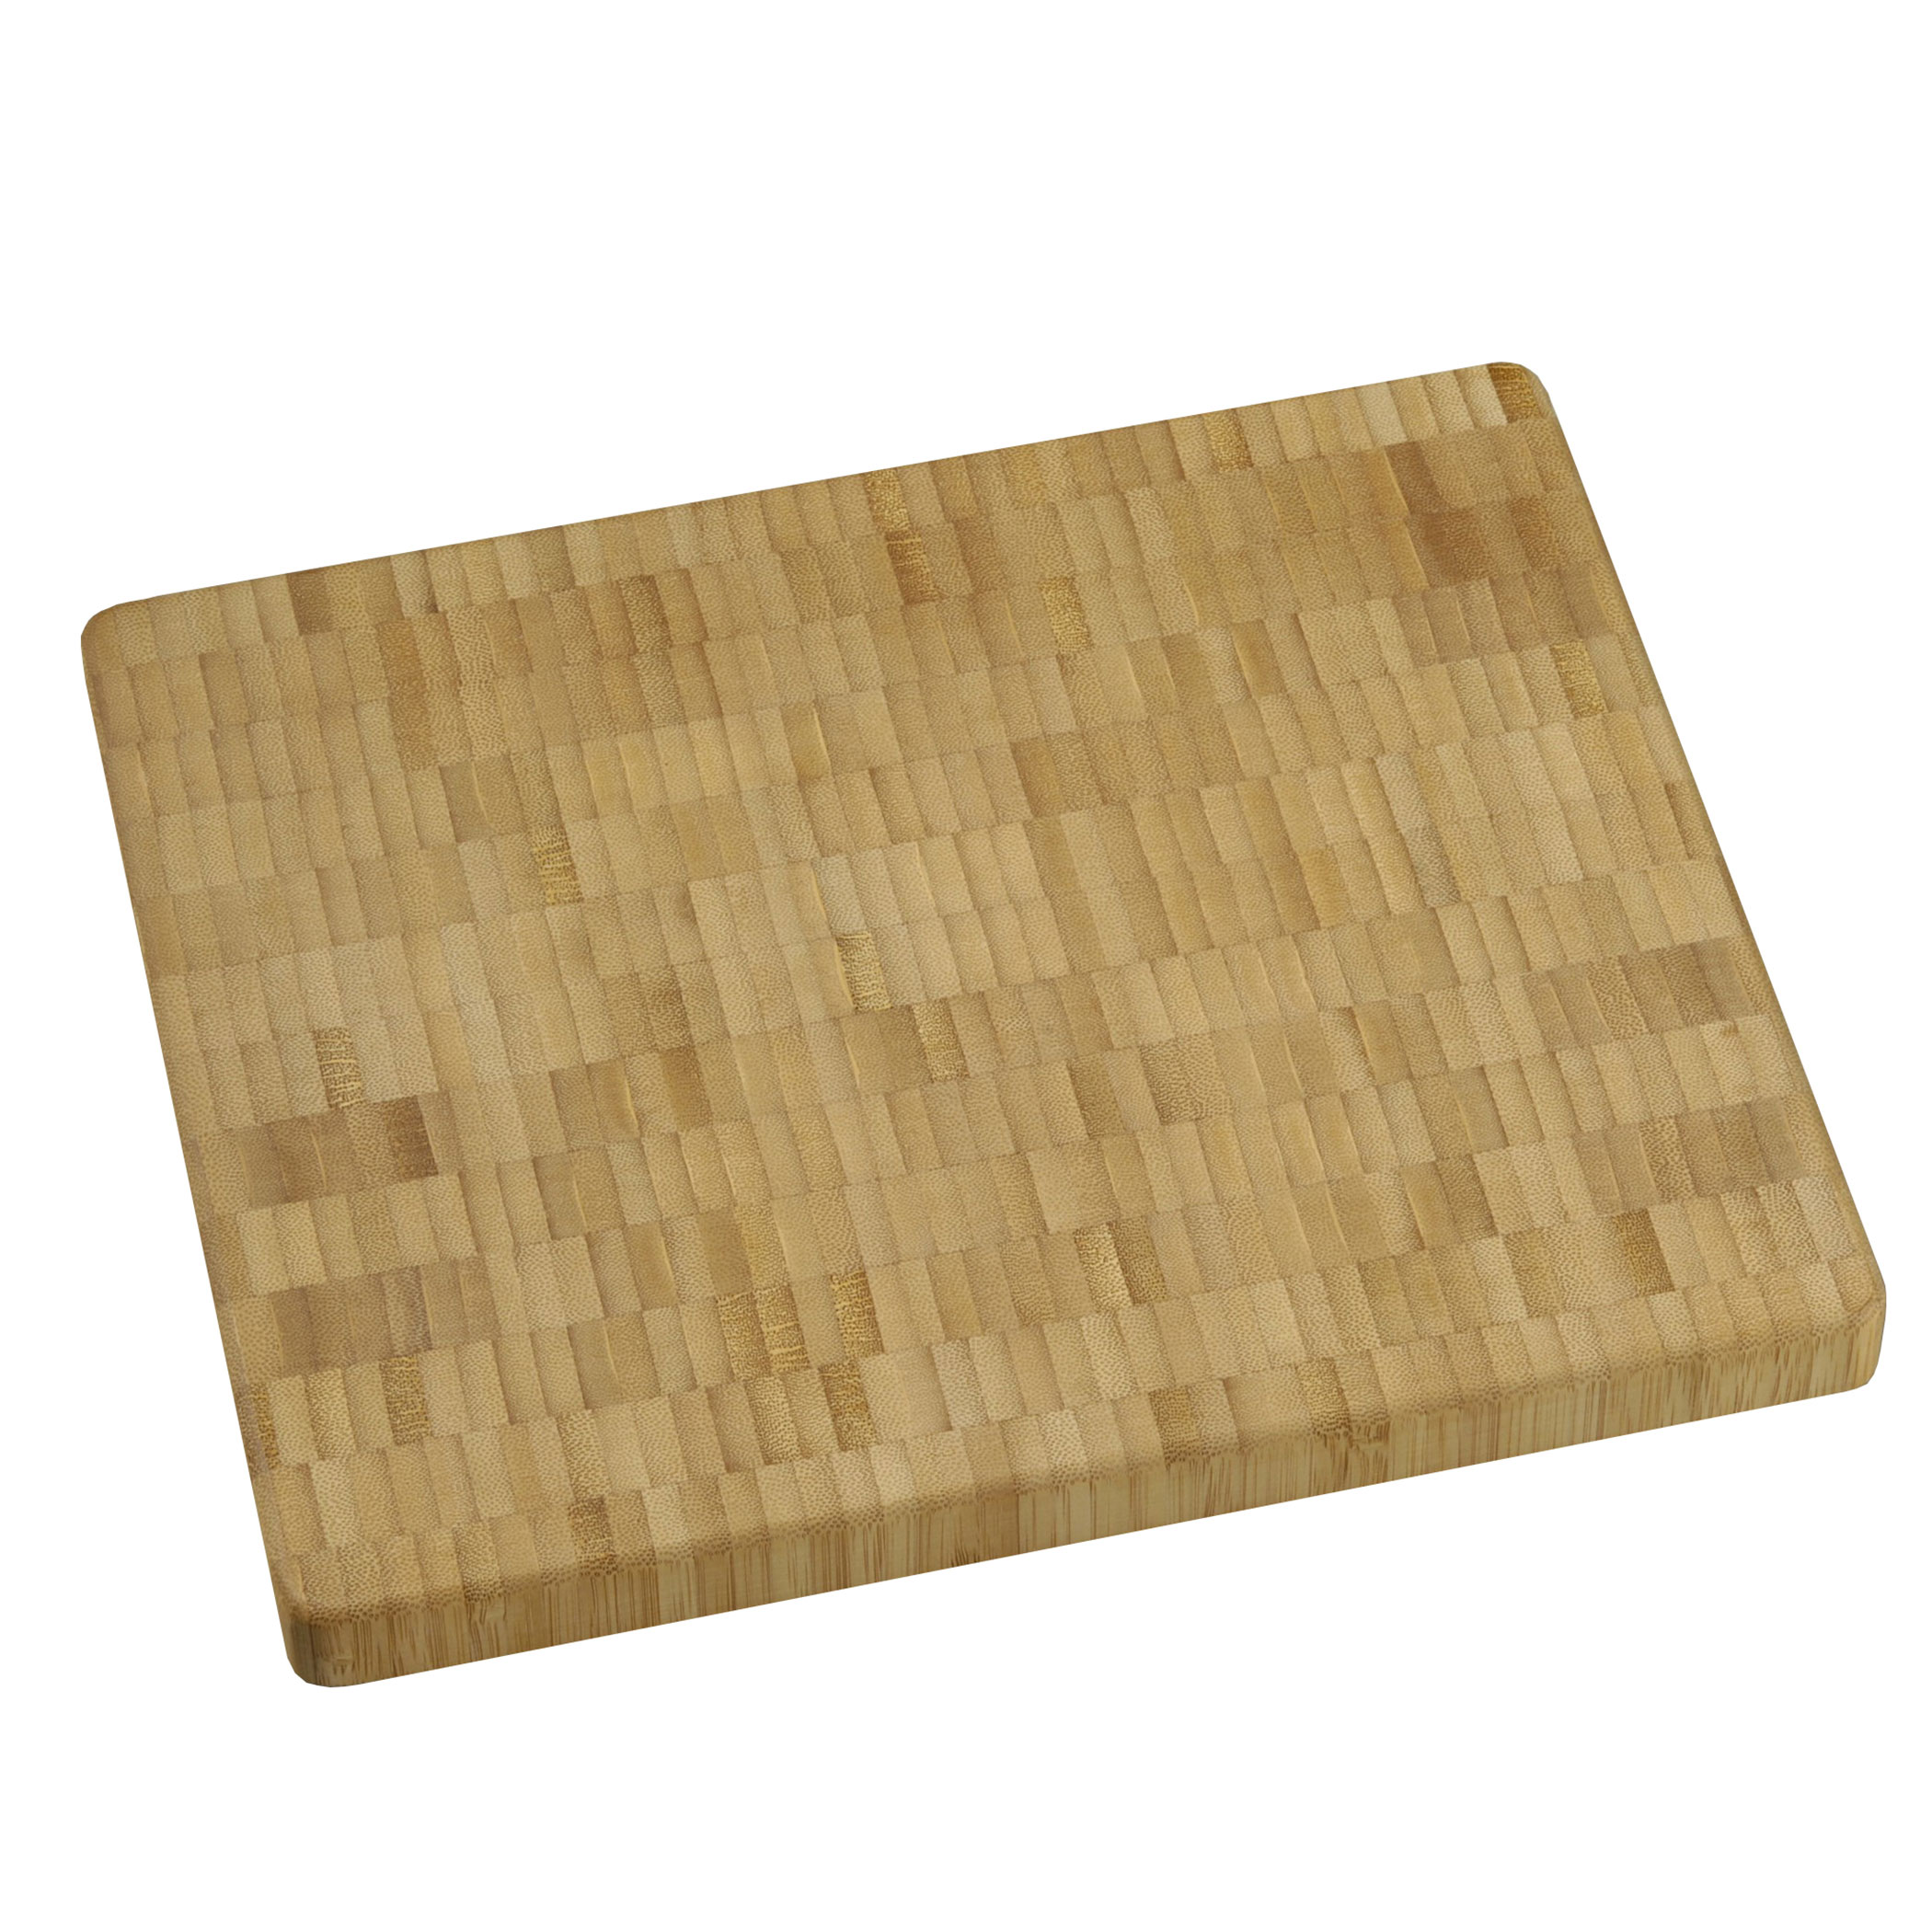 10 X 12 Inch X 1 Inch Thick Bamboo End-grain Chopping Block